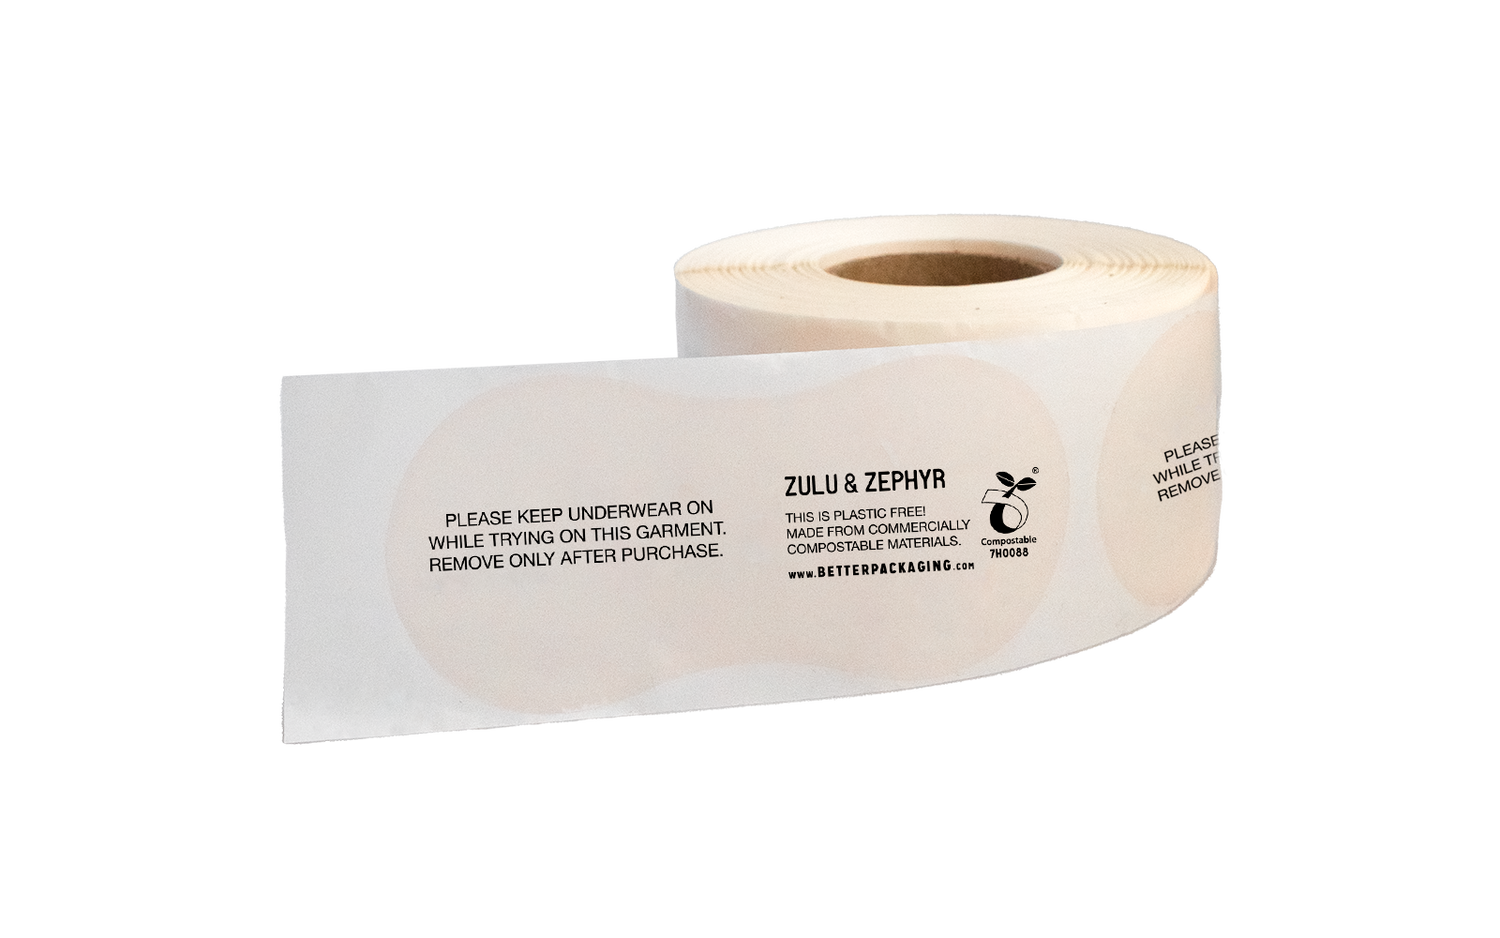 Zulu & Zephyr branded roll of Better Packaging compostable hygiene liners 